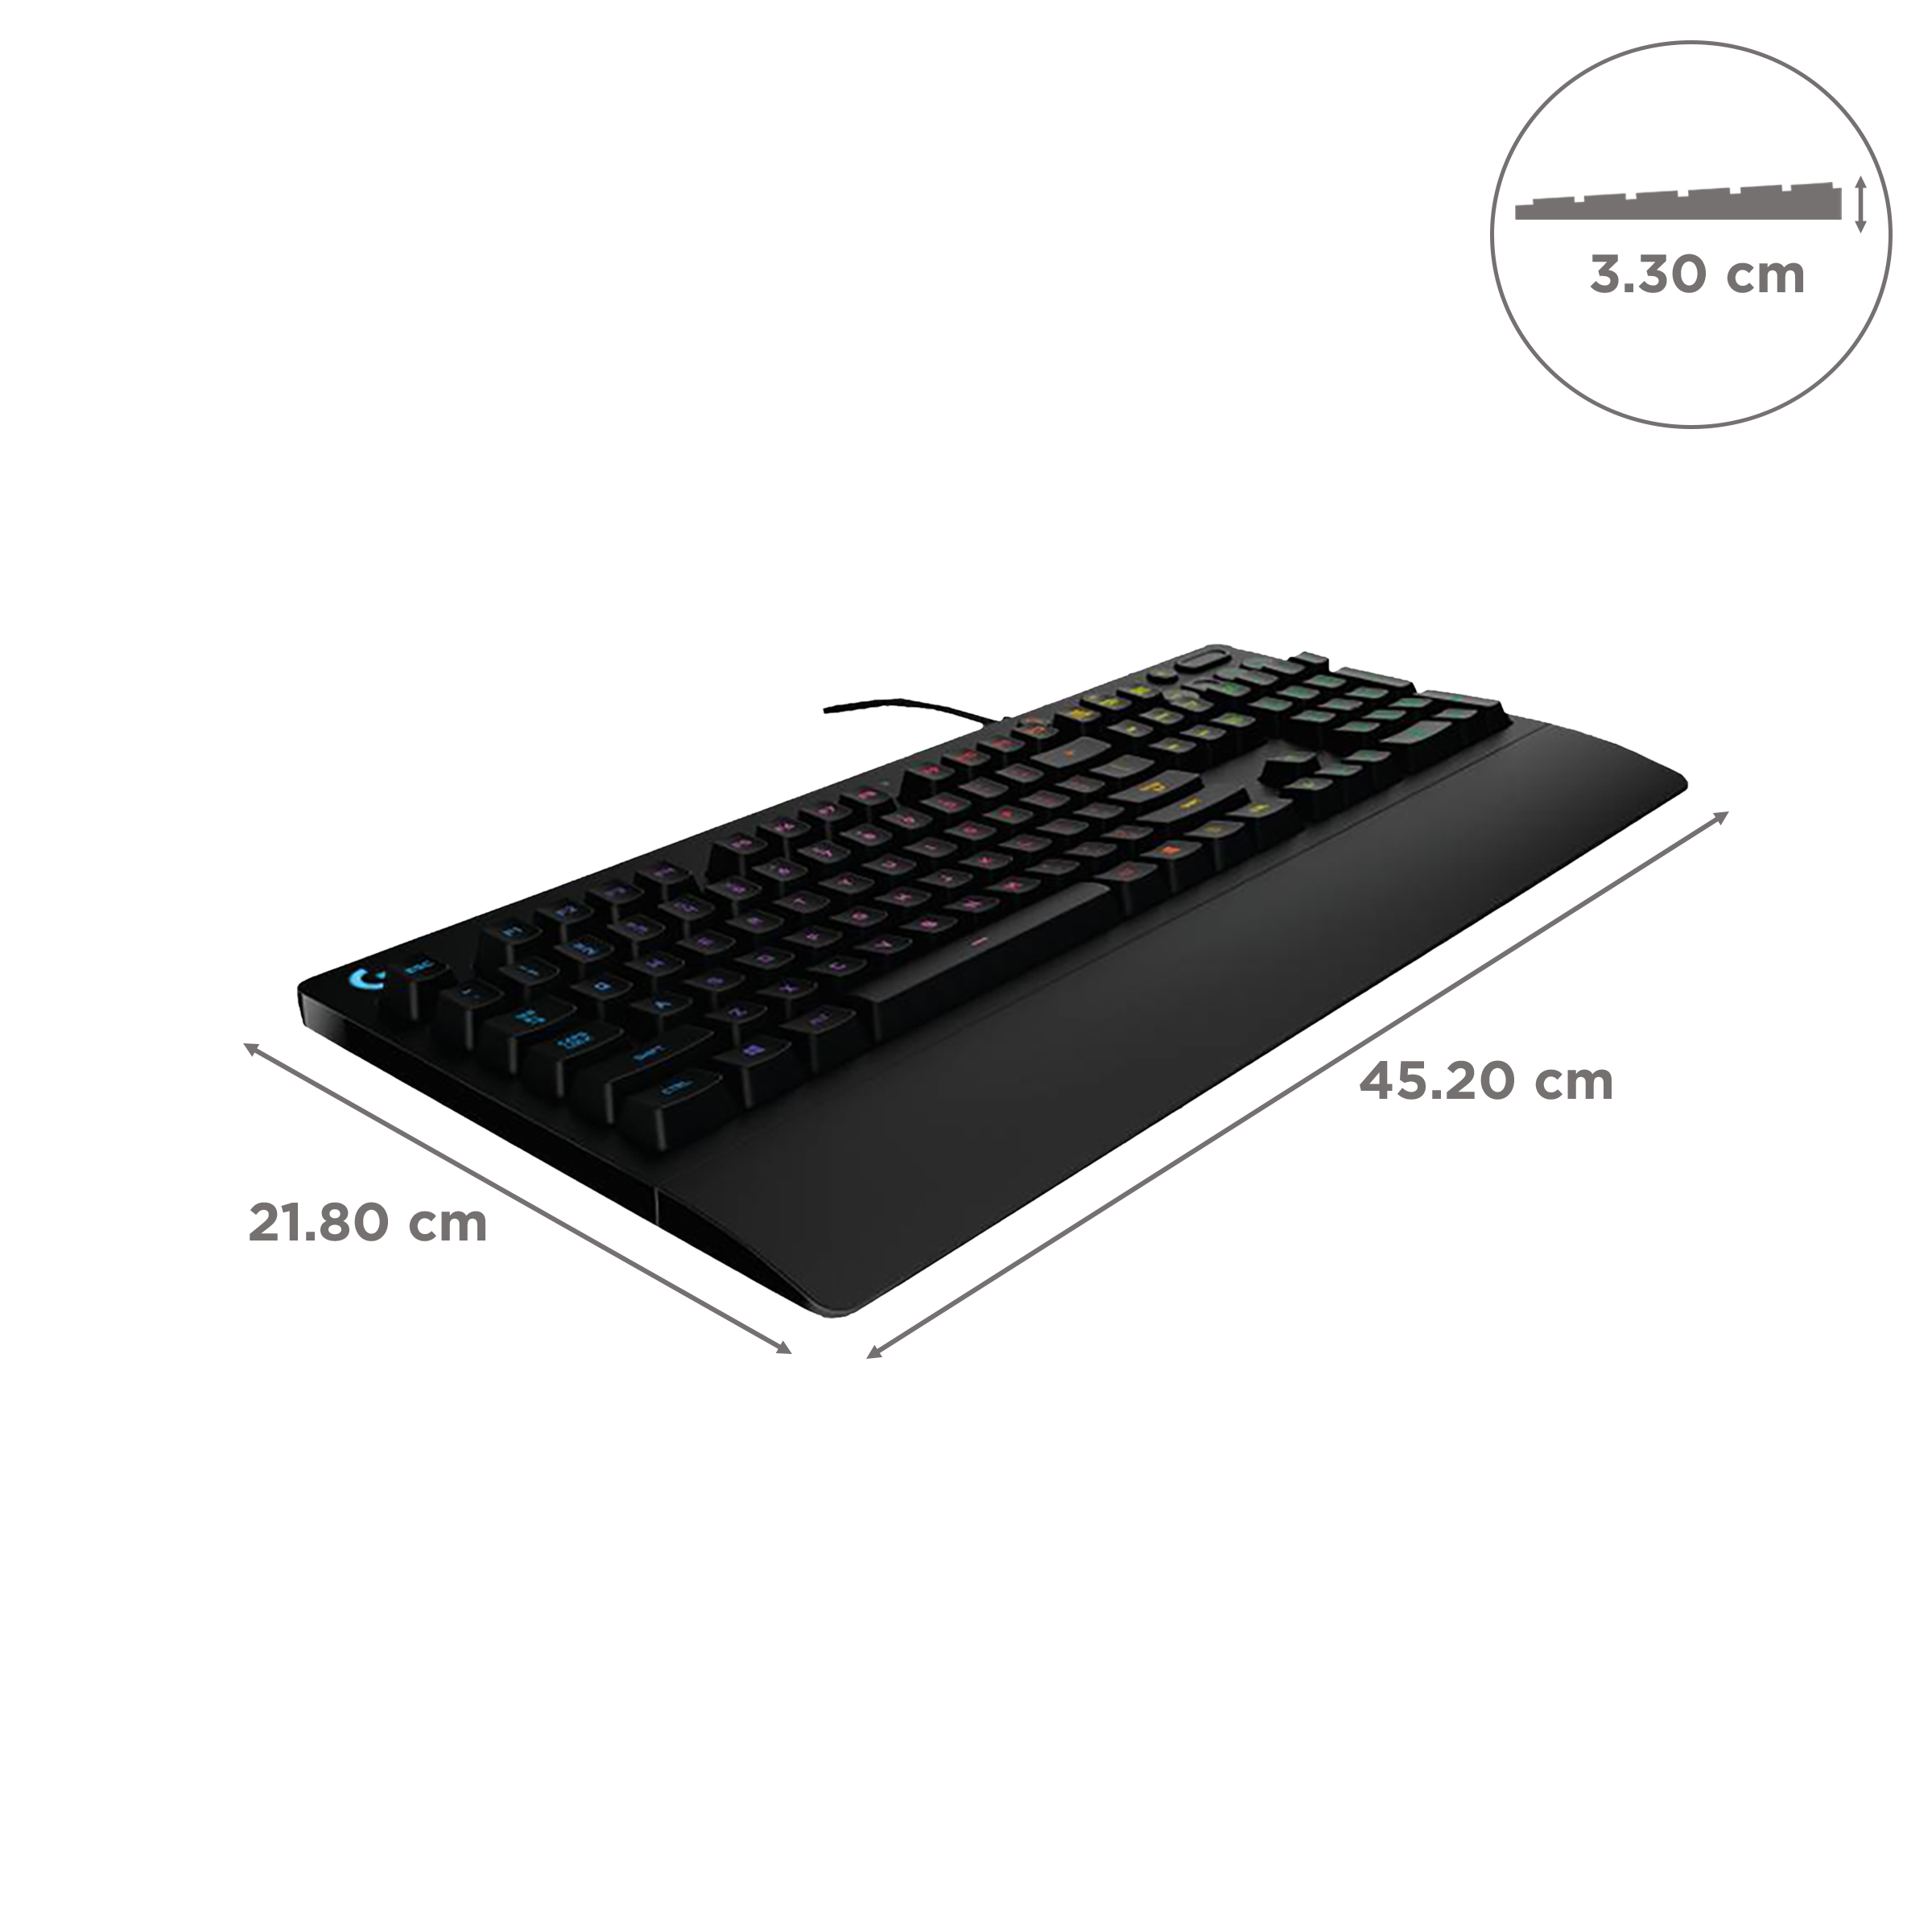 Logitech G213 Prodigy Gaming Keyboard, LIGHTSYNC RGB Backlit Keys,  Spill-Resistant, Customizable Keys, Dedicated Multi-Media Keys – Black :  Video Games 